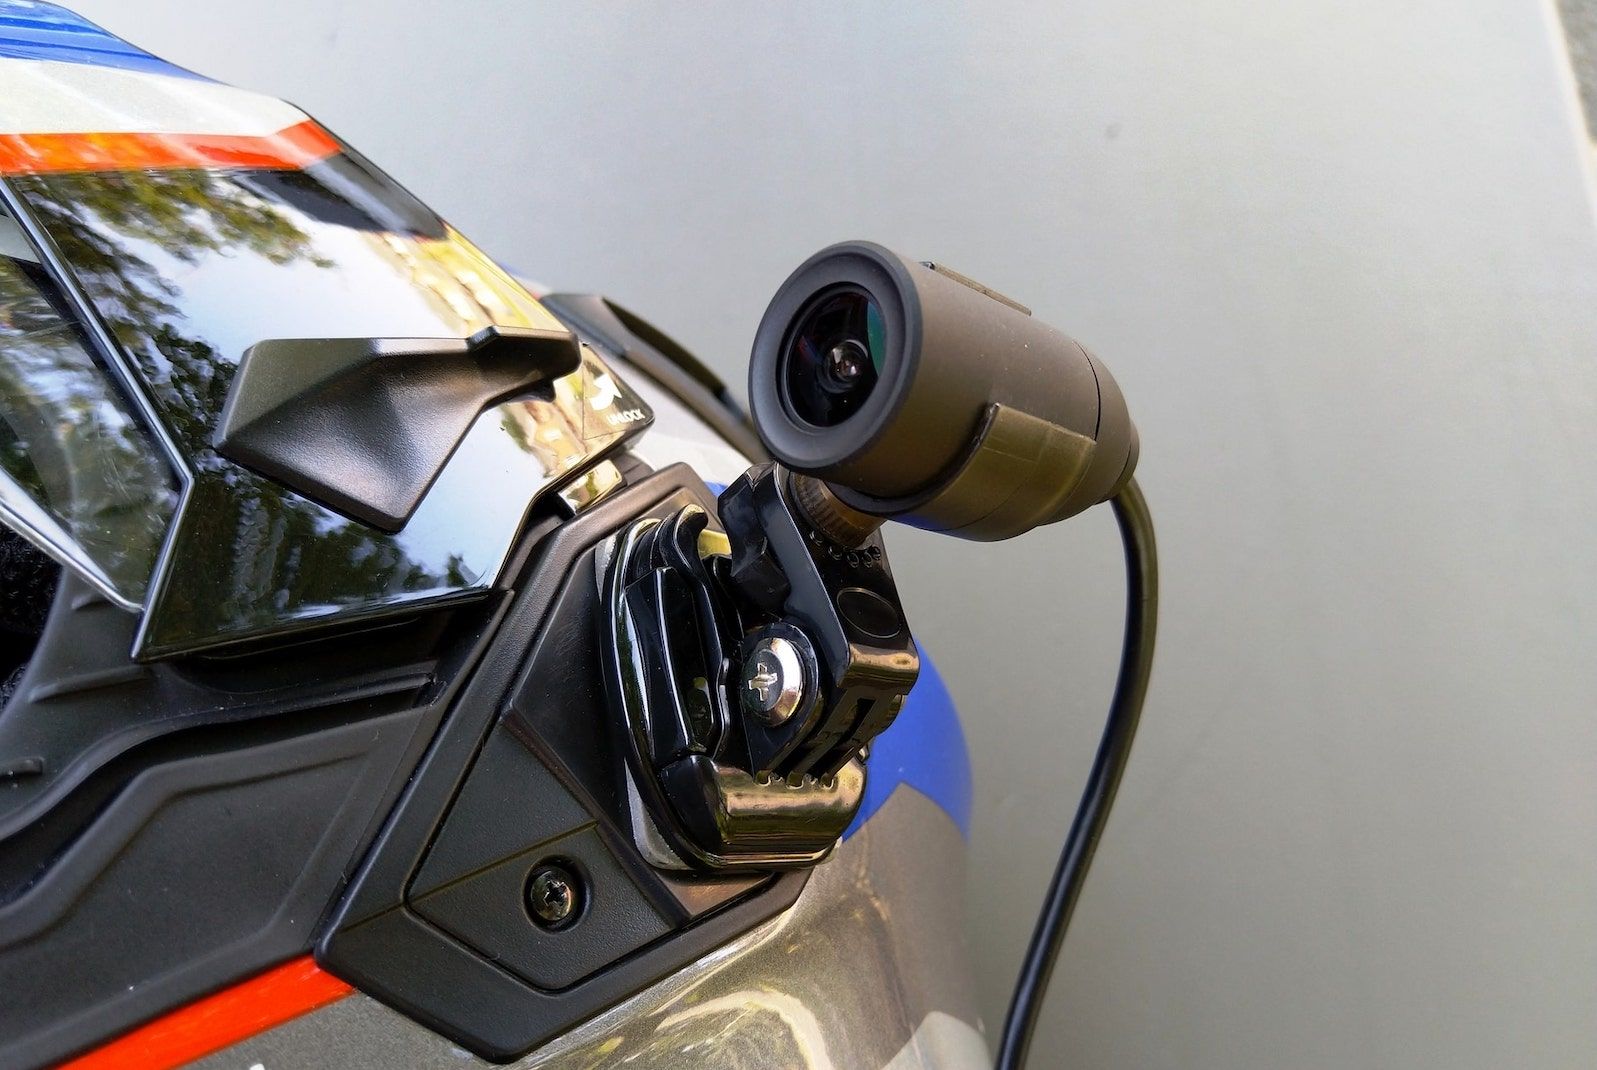 Action Camera on a Helmet